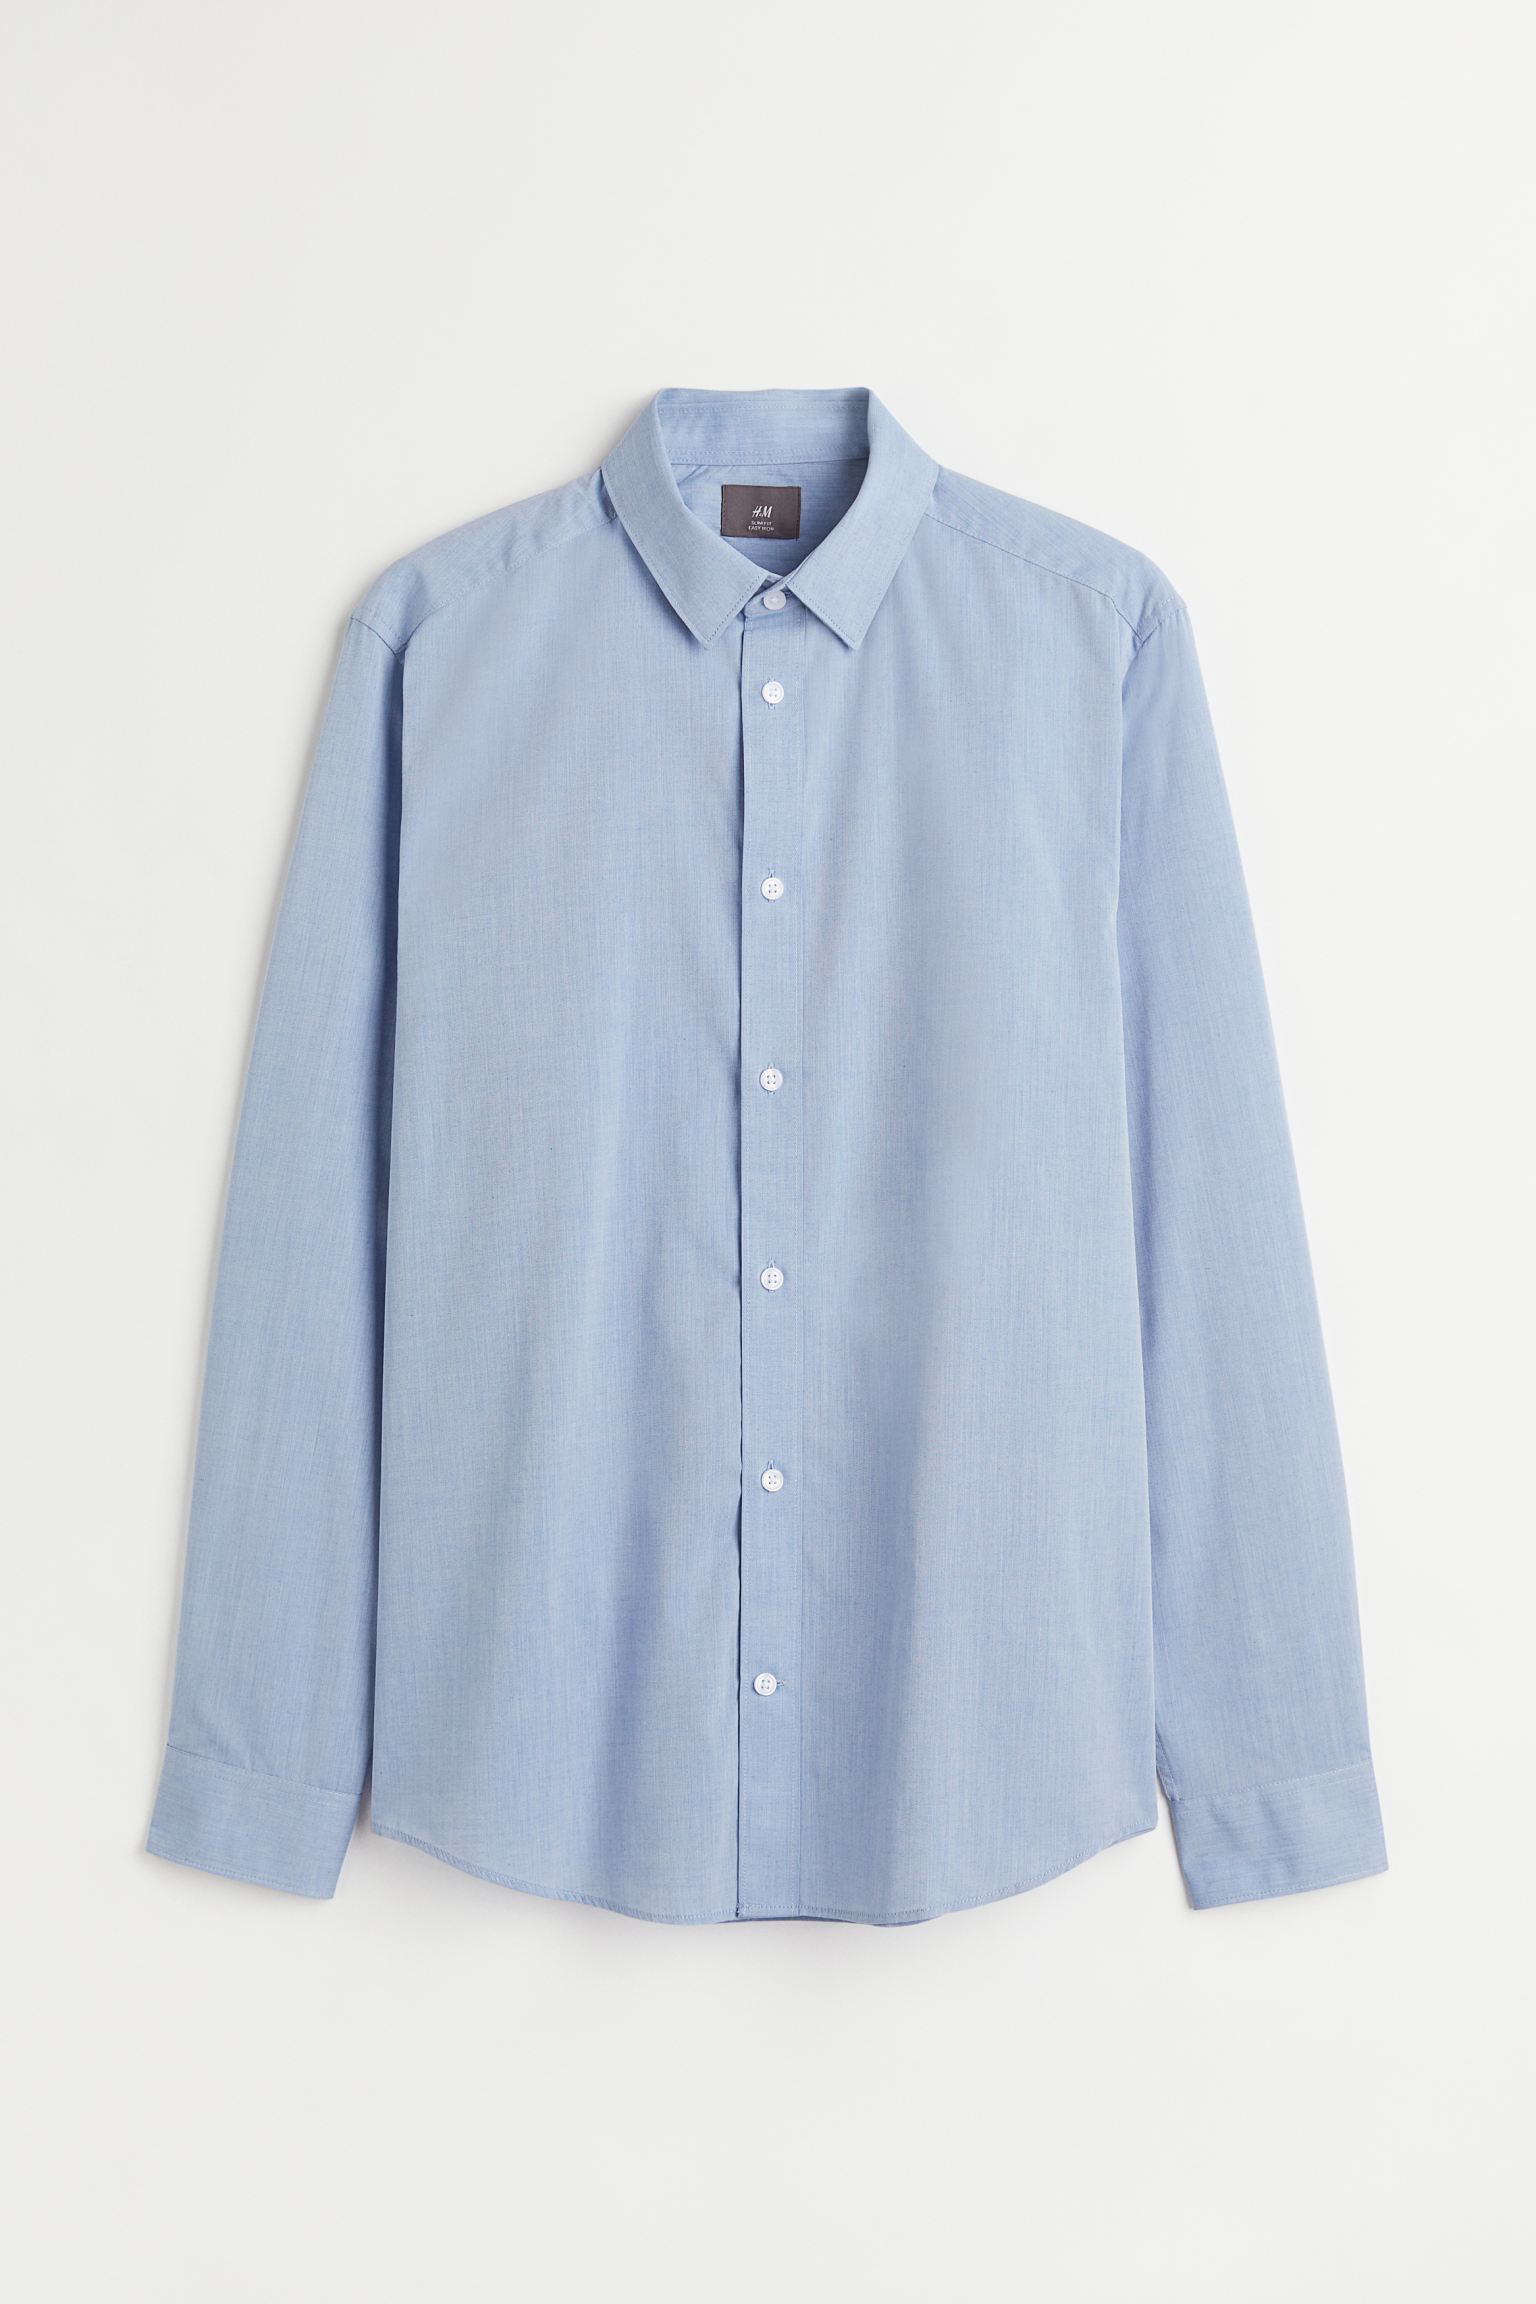 Рубашка мужская H&M 976709008 голубая XL (доставка из-за рубежа)